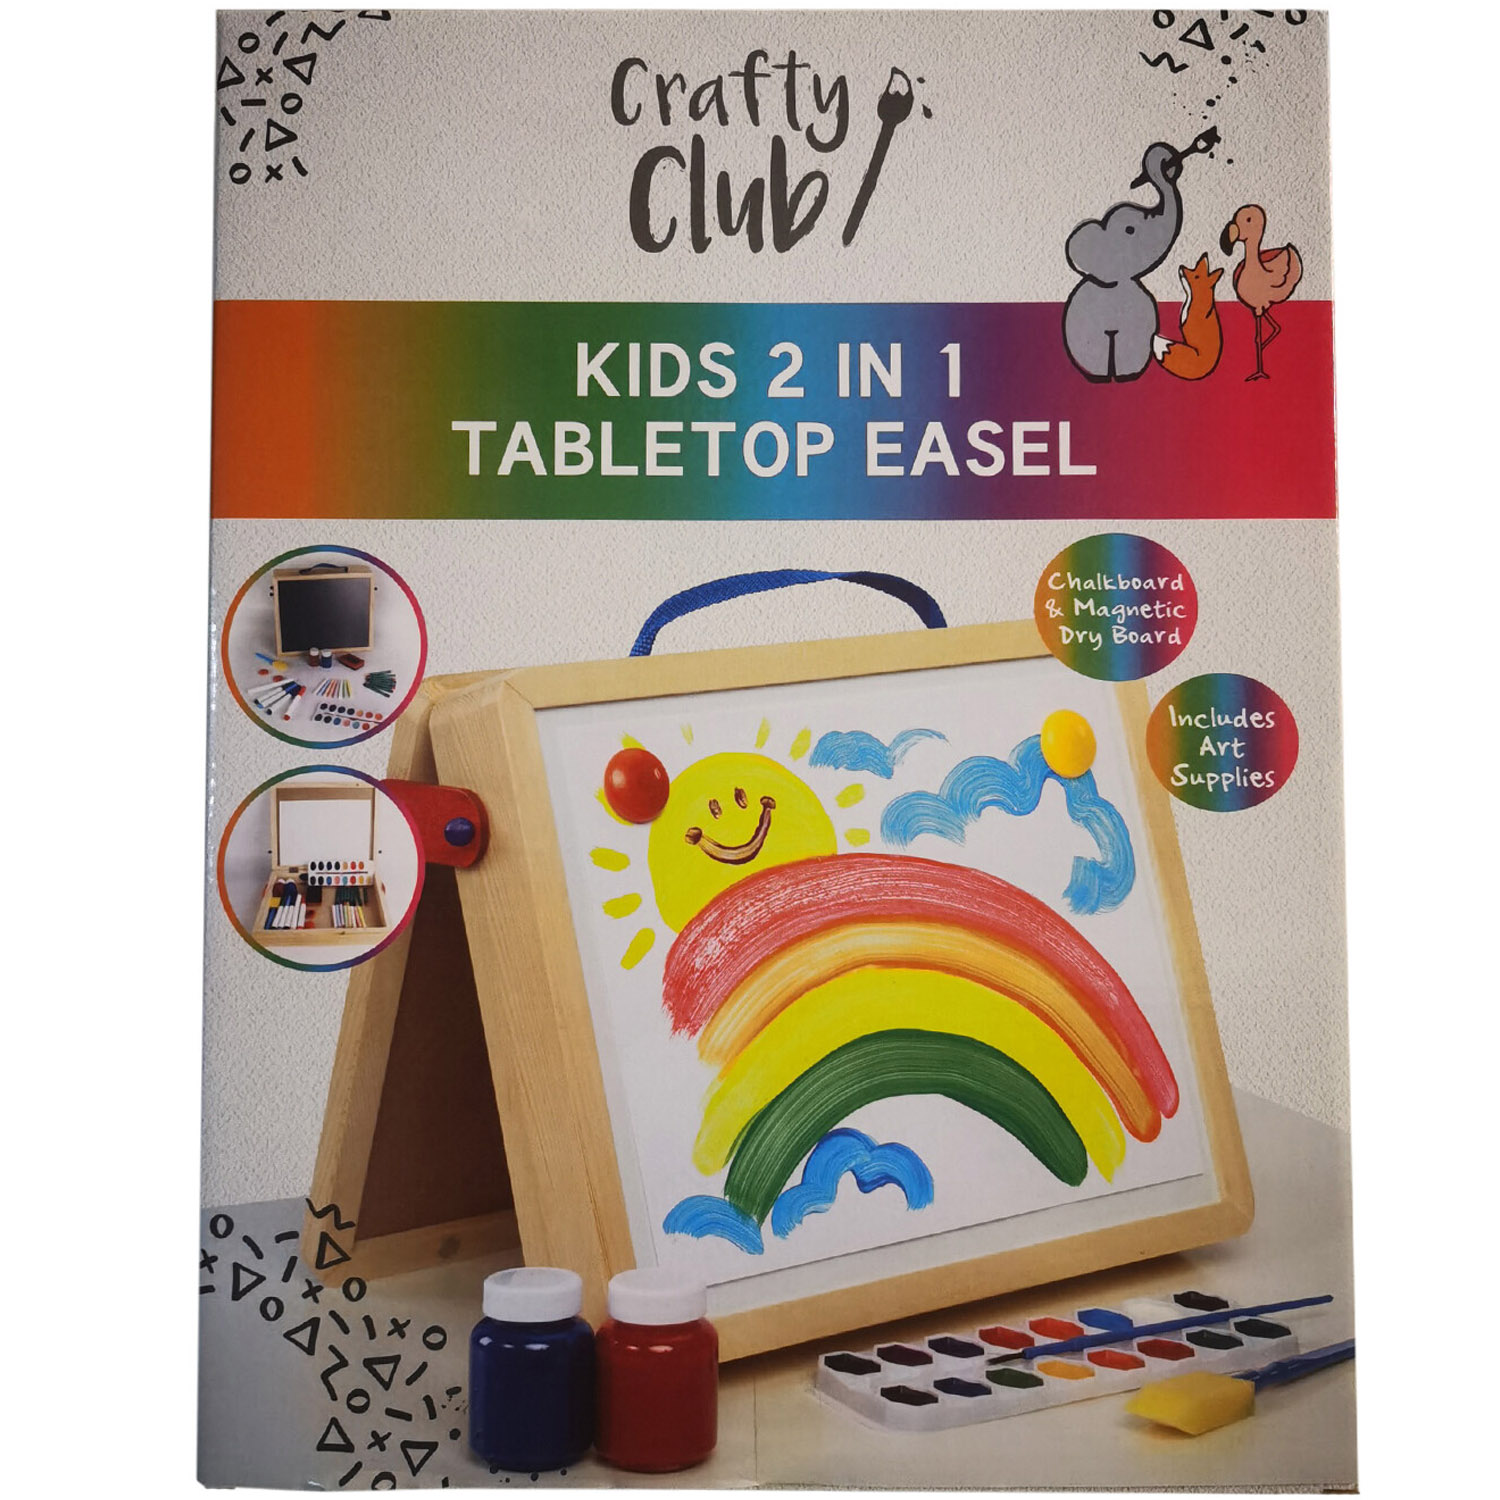 Crafty Club Kids 2 in 1 Tabletop Easel Image